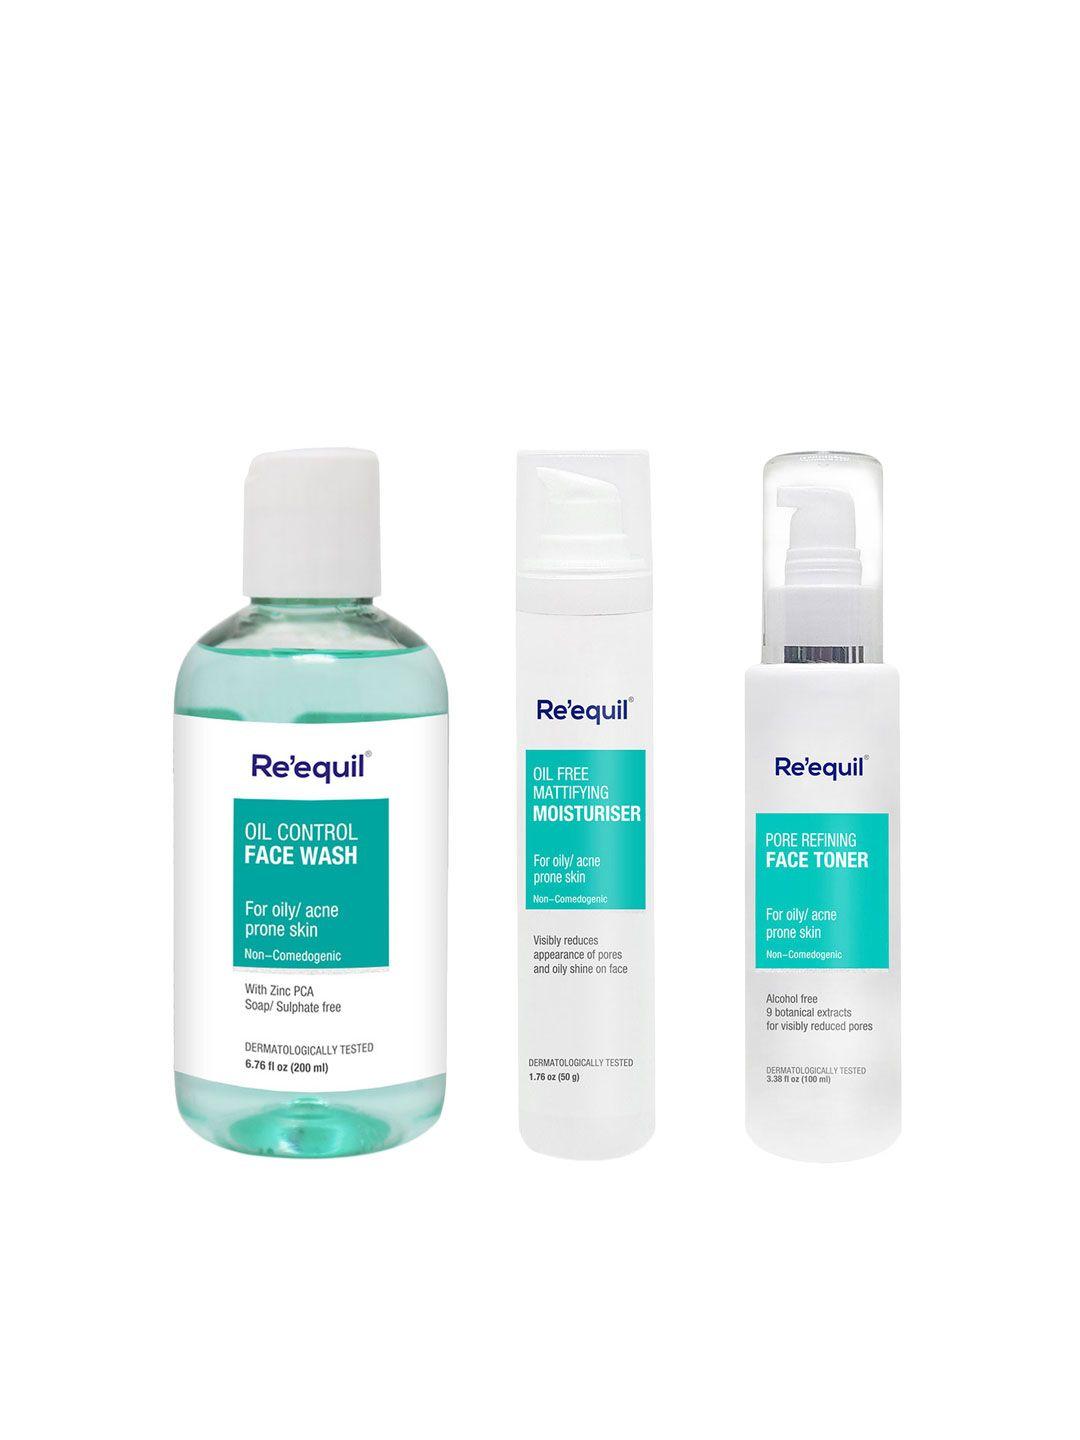 reequil pore set of face toner, mattifying moisturiser & oil control anti acne face wash